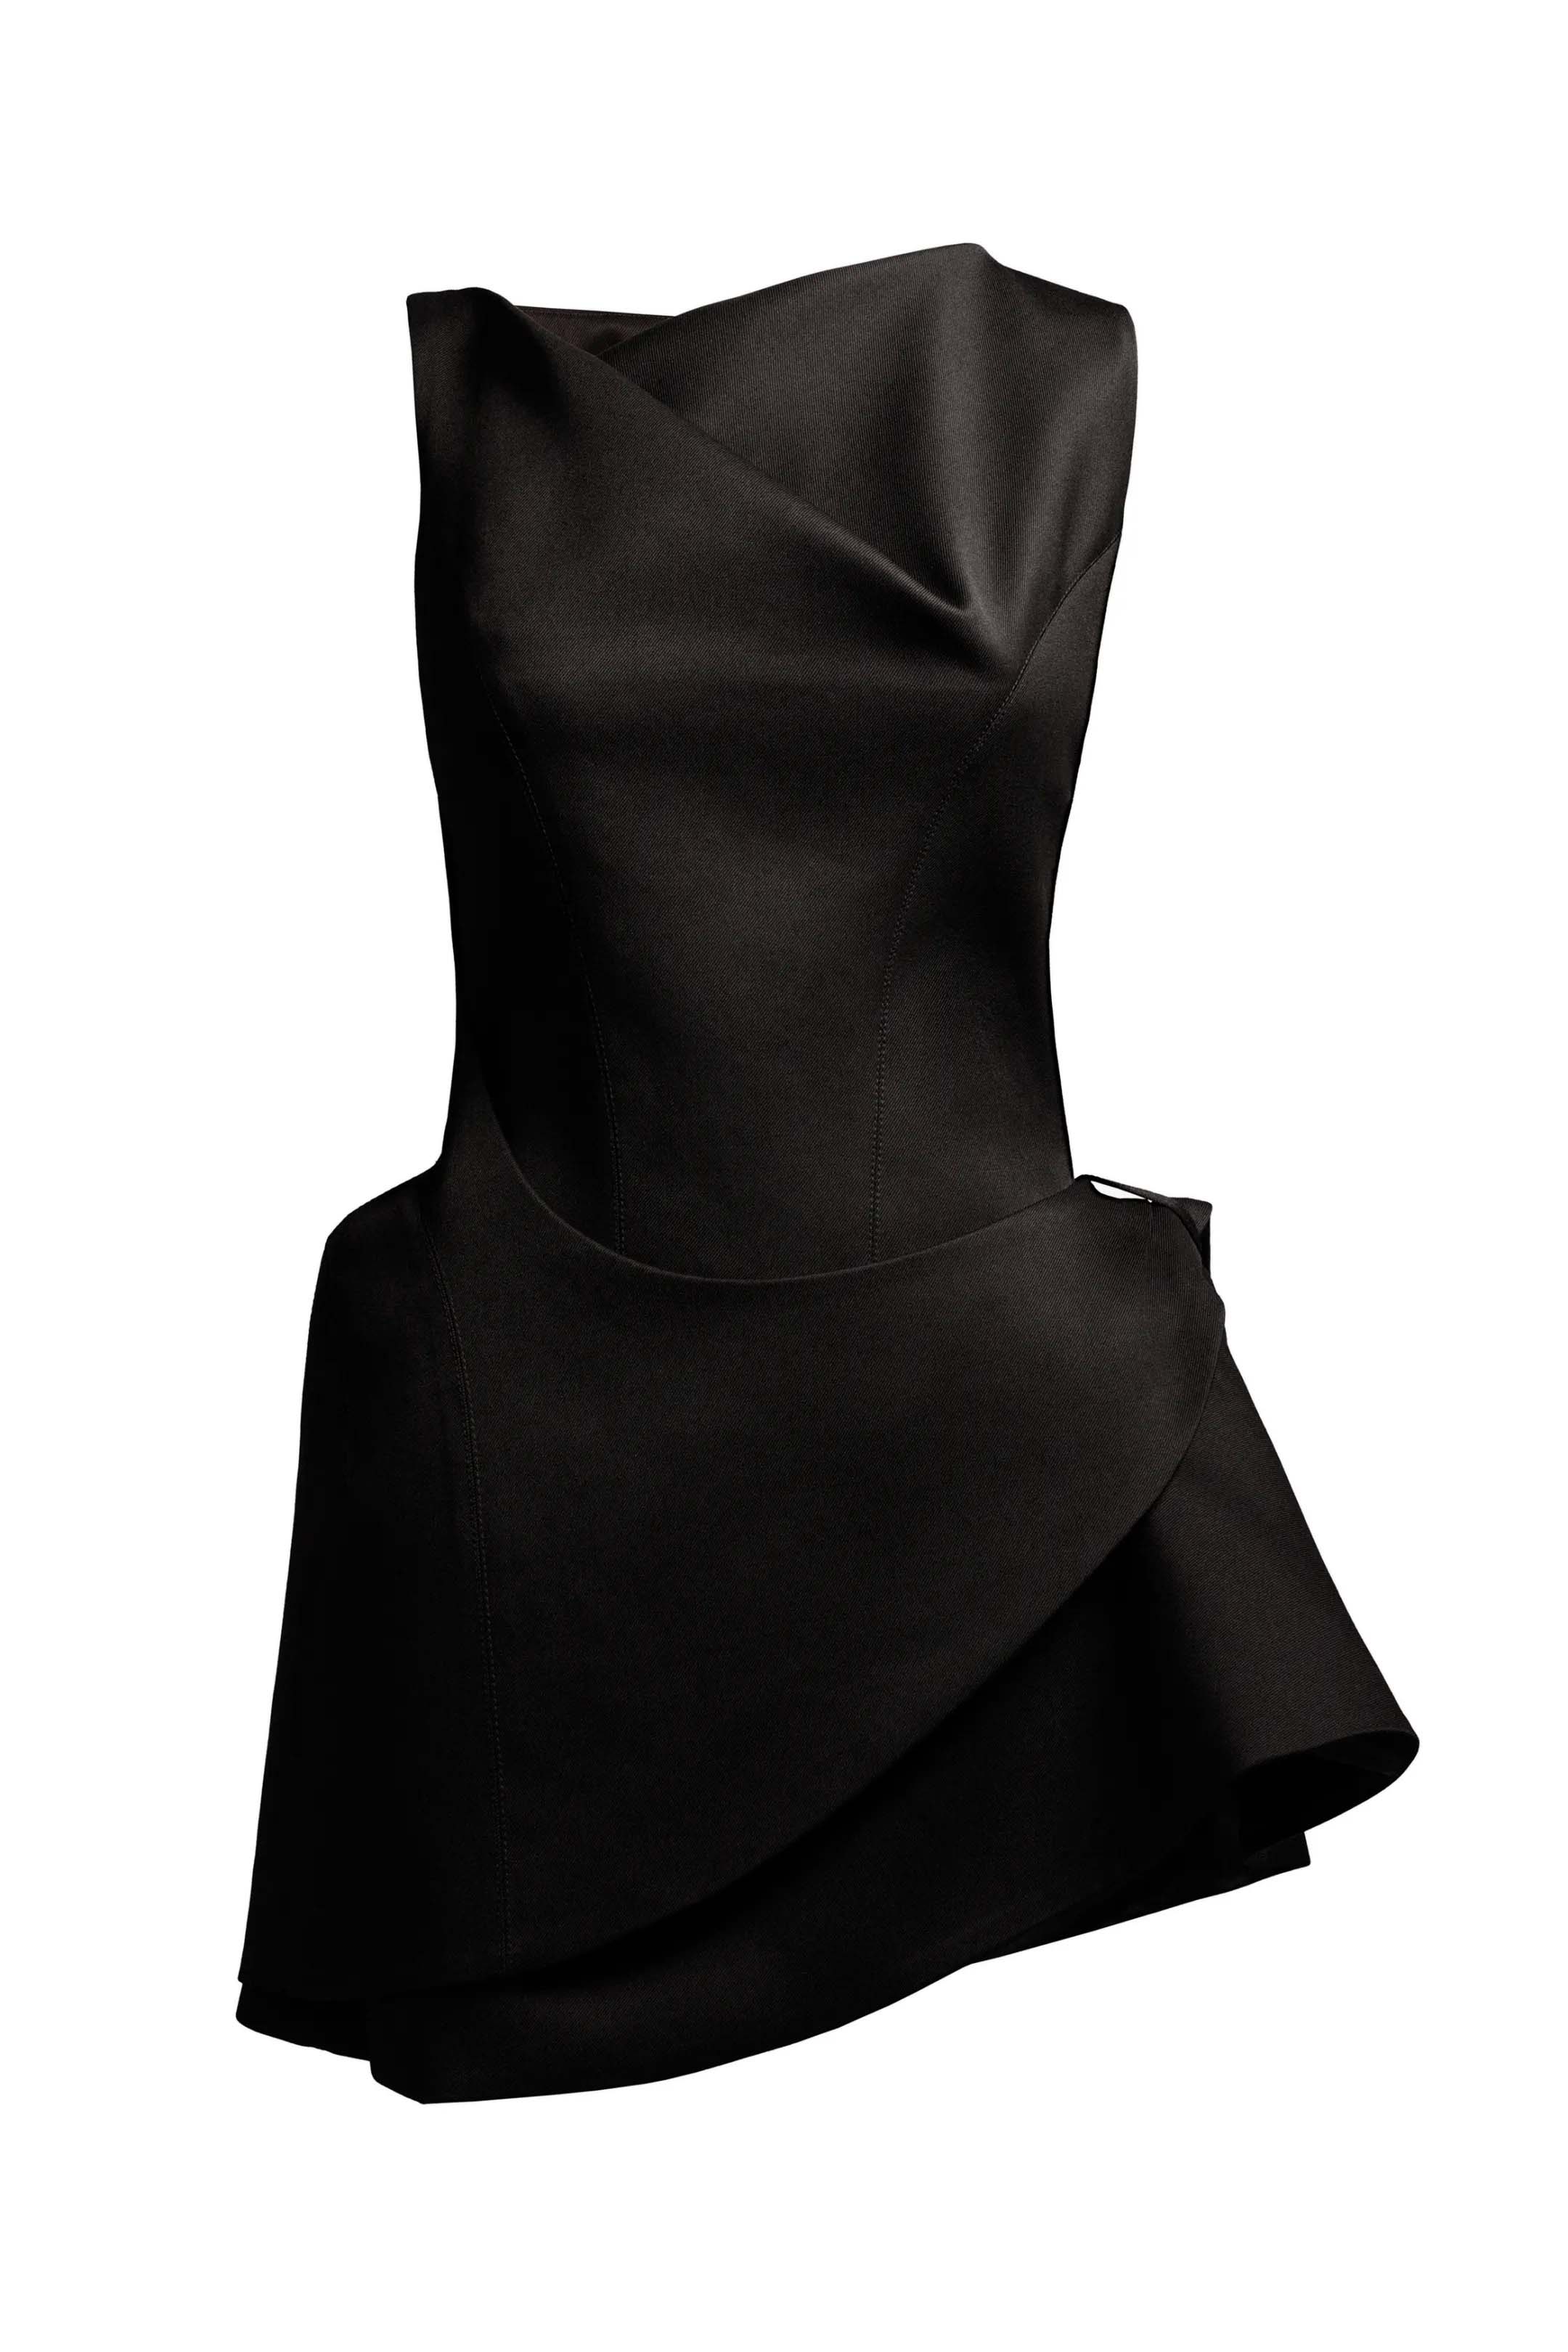 Mugler X H&M HM Wool Mini Dress Black Size UK 20 22 24 US 18 20 EU 48 50 52  New | eBay